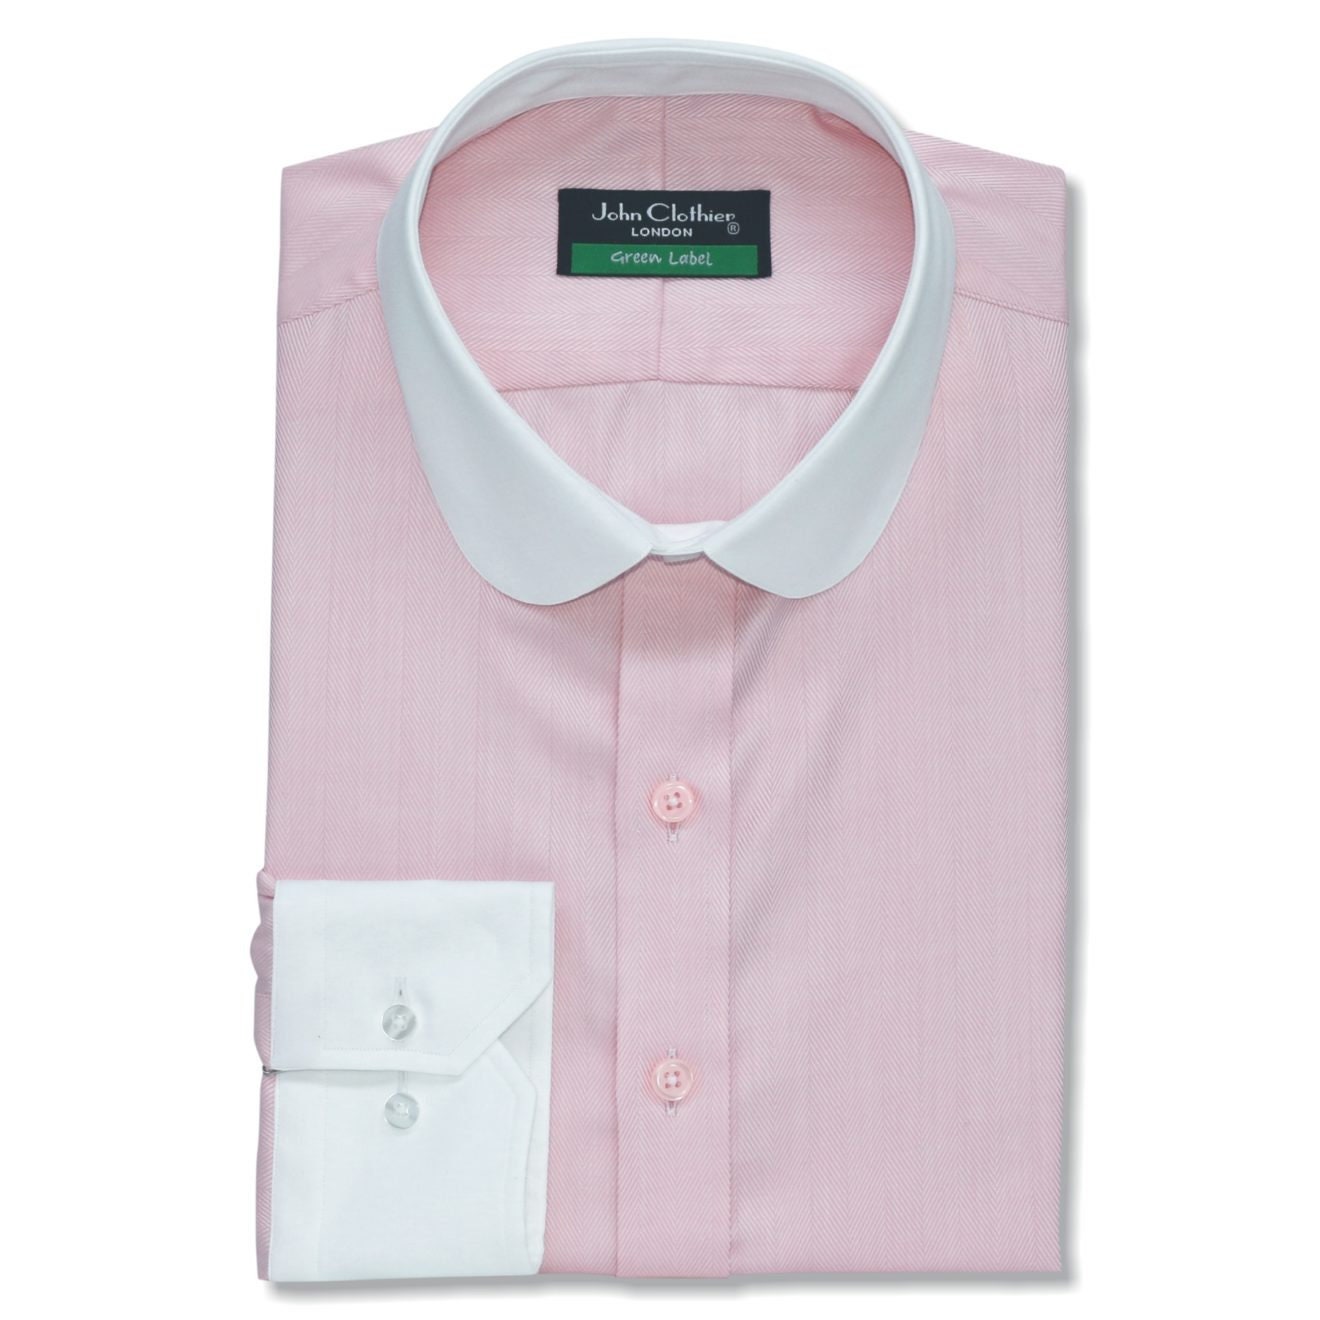 32 Best Thomas Pink Shirts ideas  thomas pink shirts, thomas pink